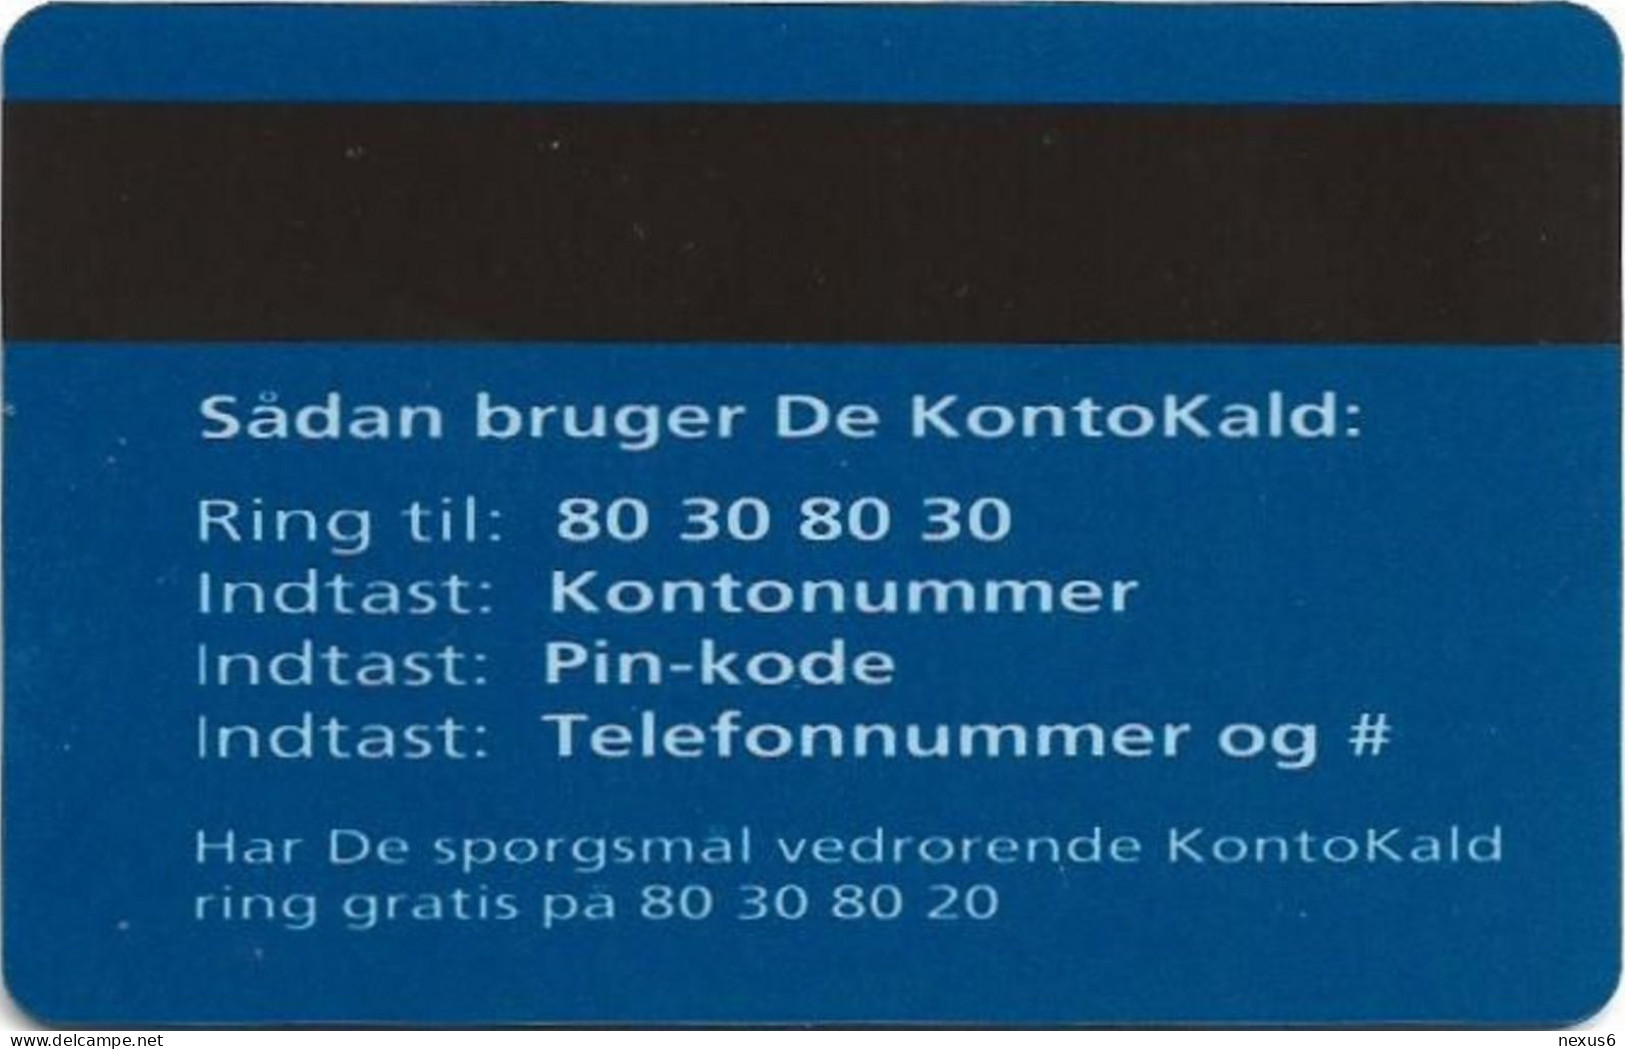 Denmark - Tele Danmark - KON-DEN-003 - Kontokald (Blue) Magnetic Creditcard, Used - Denemarken